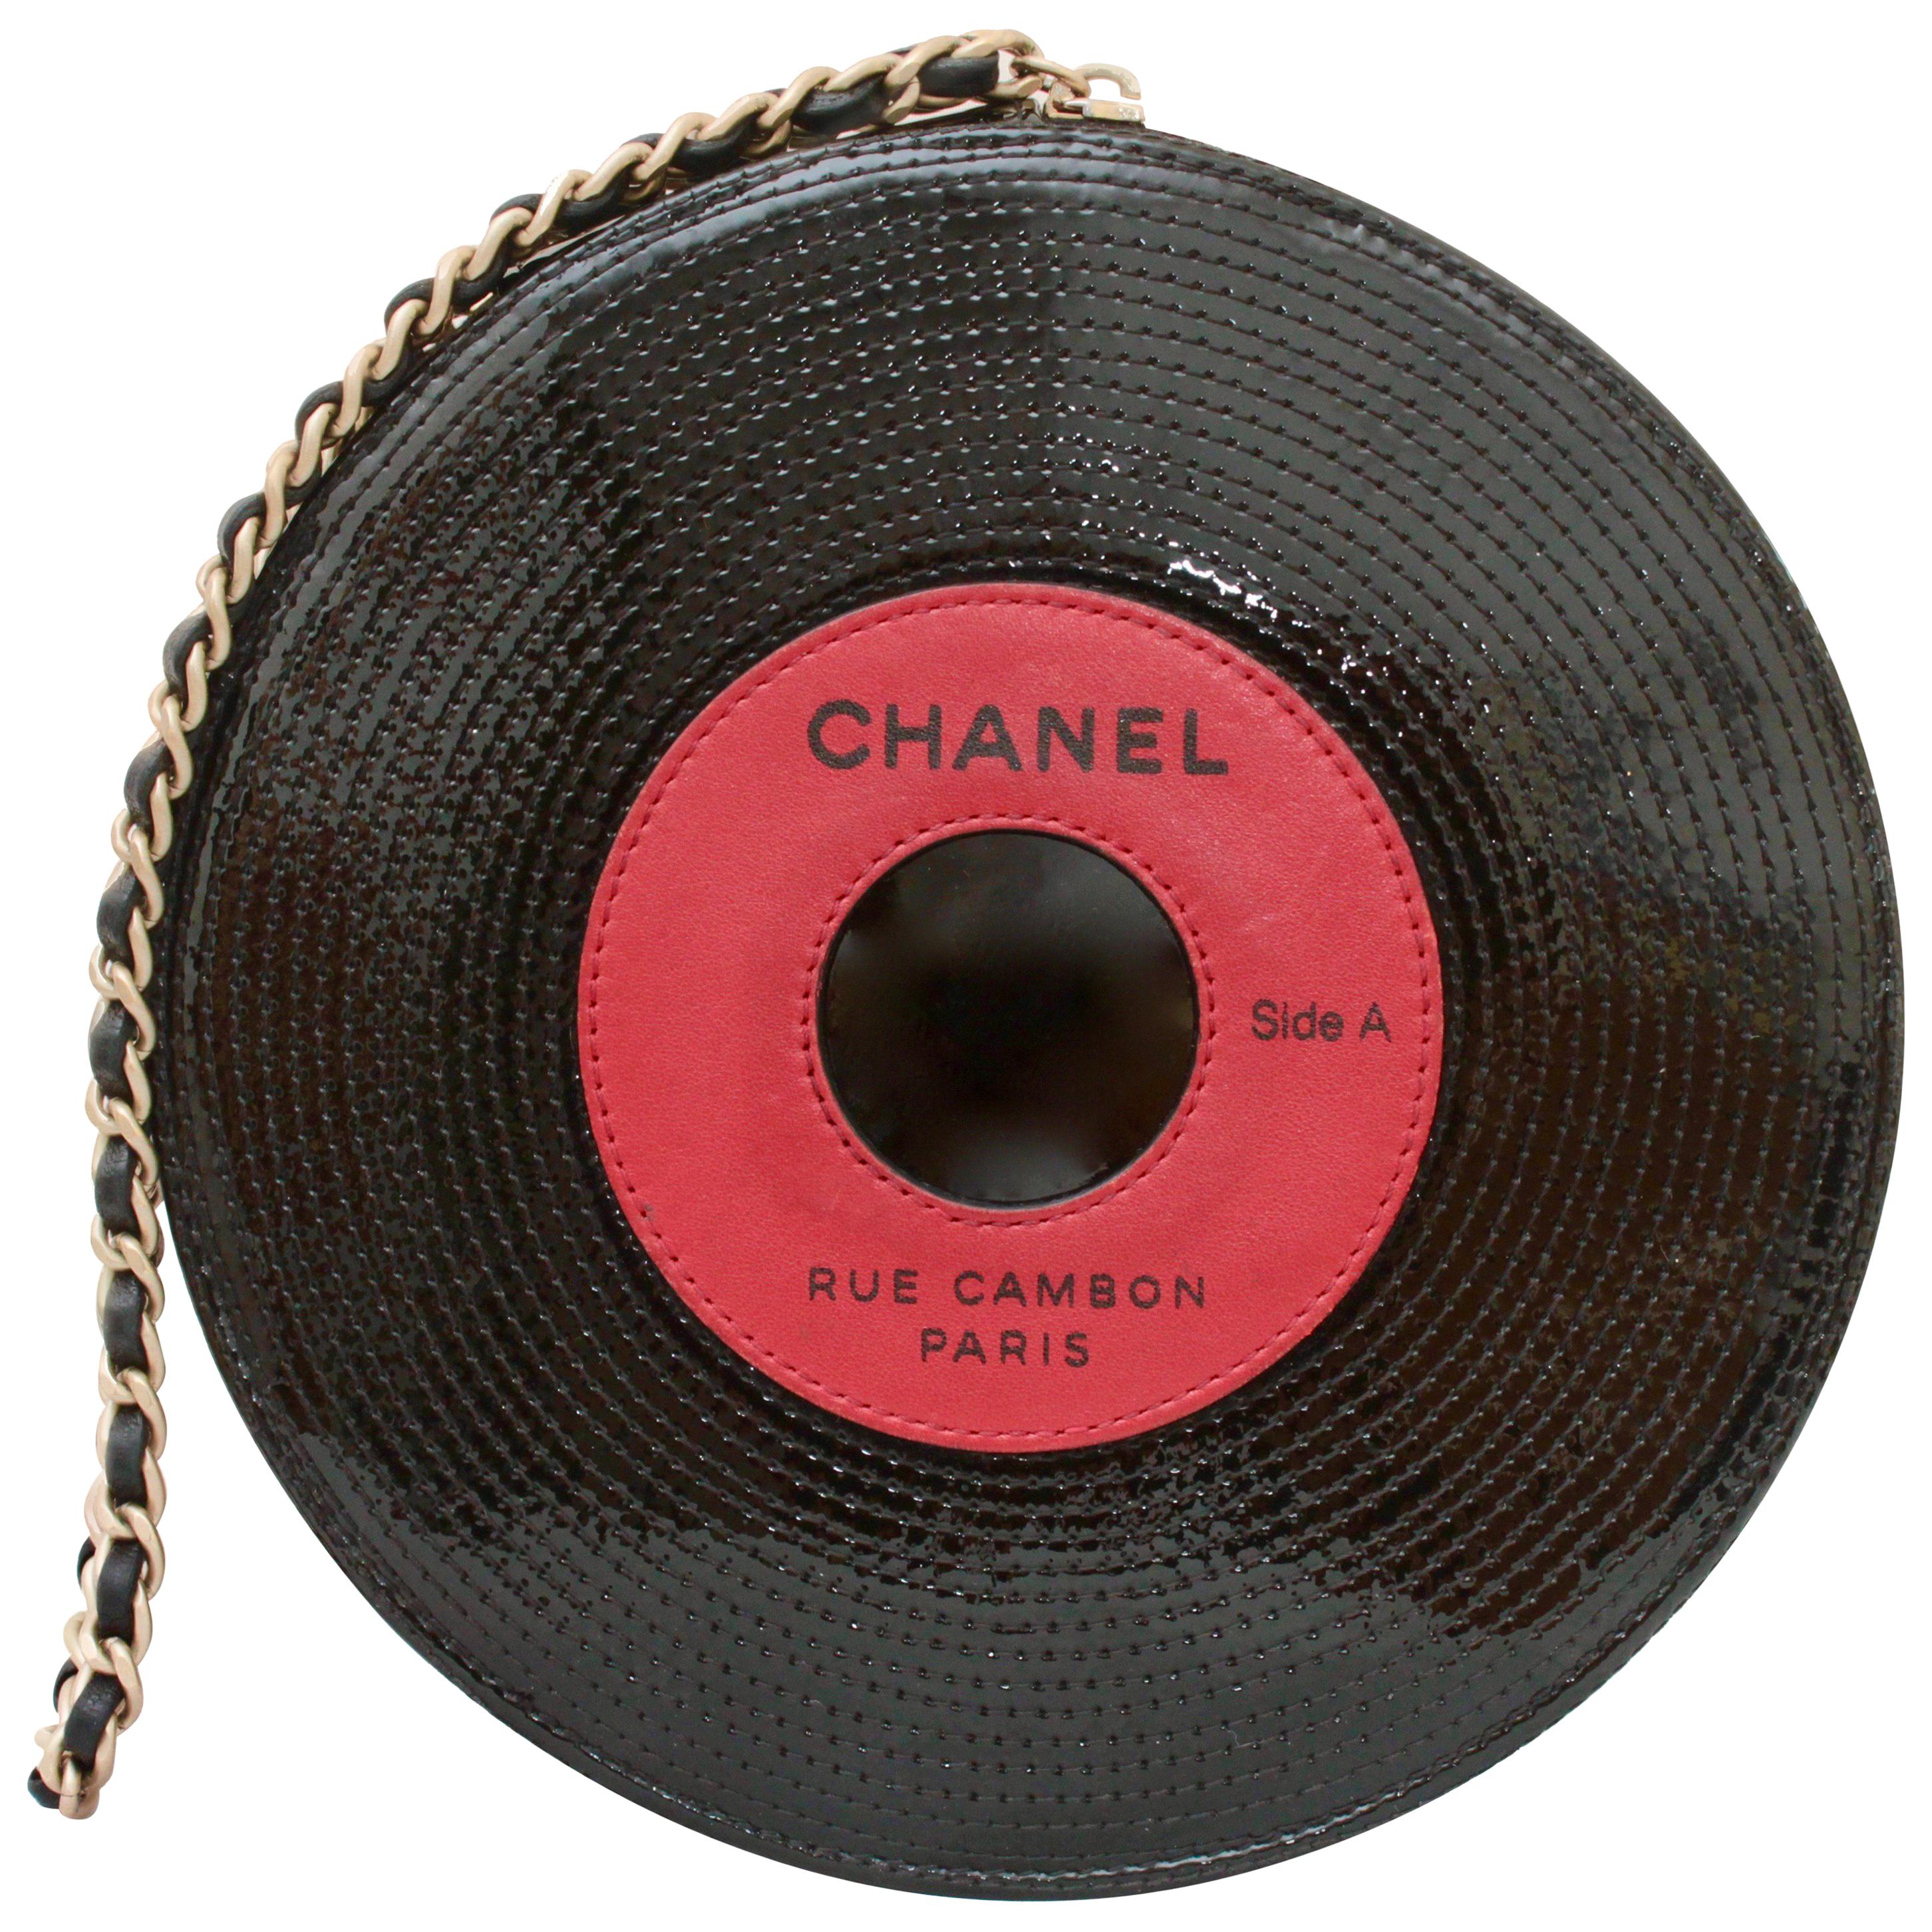 Chanel Patent Leather Ltd Ed Record Bag Evening Clutch Wristlet, 2004